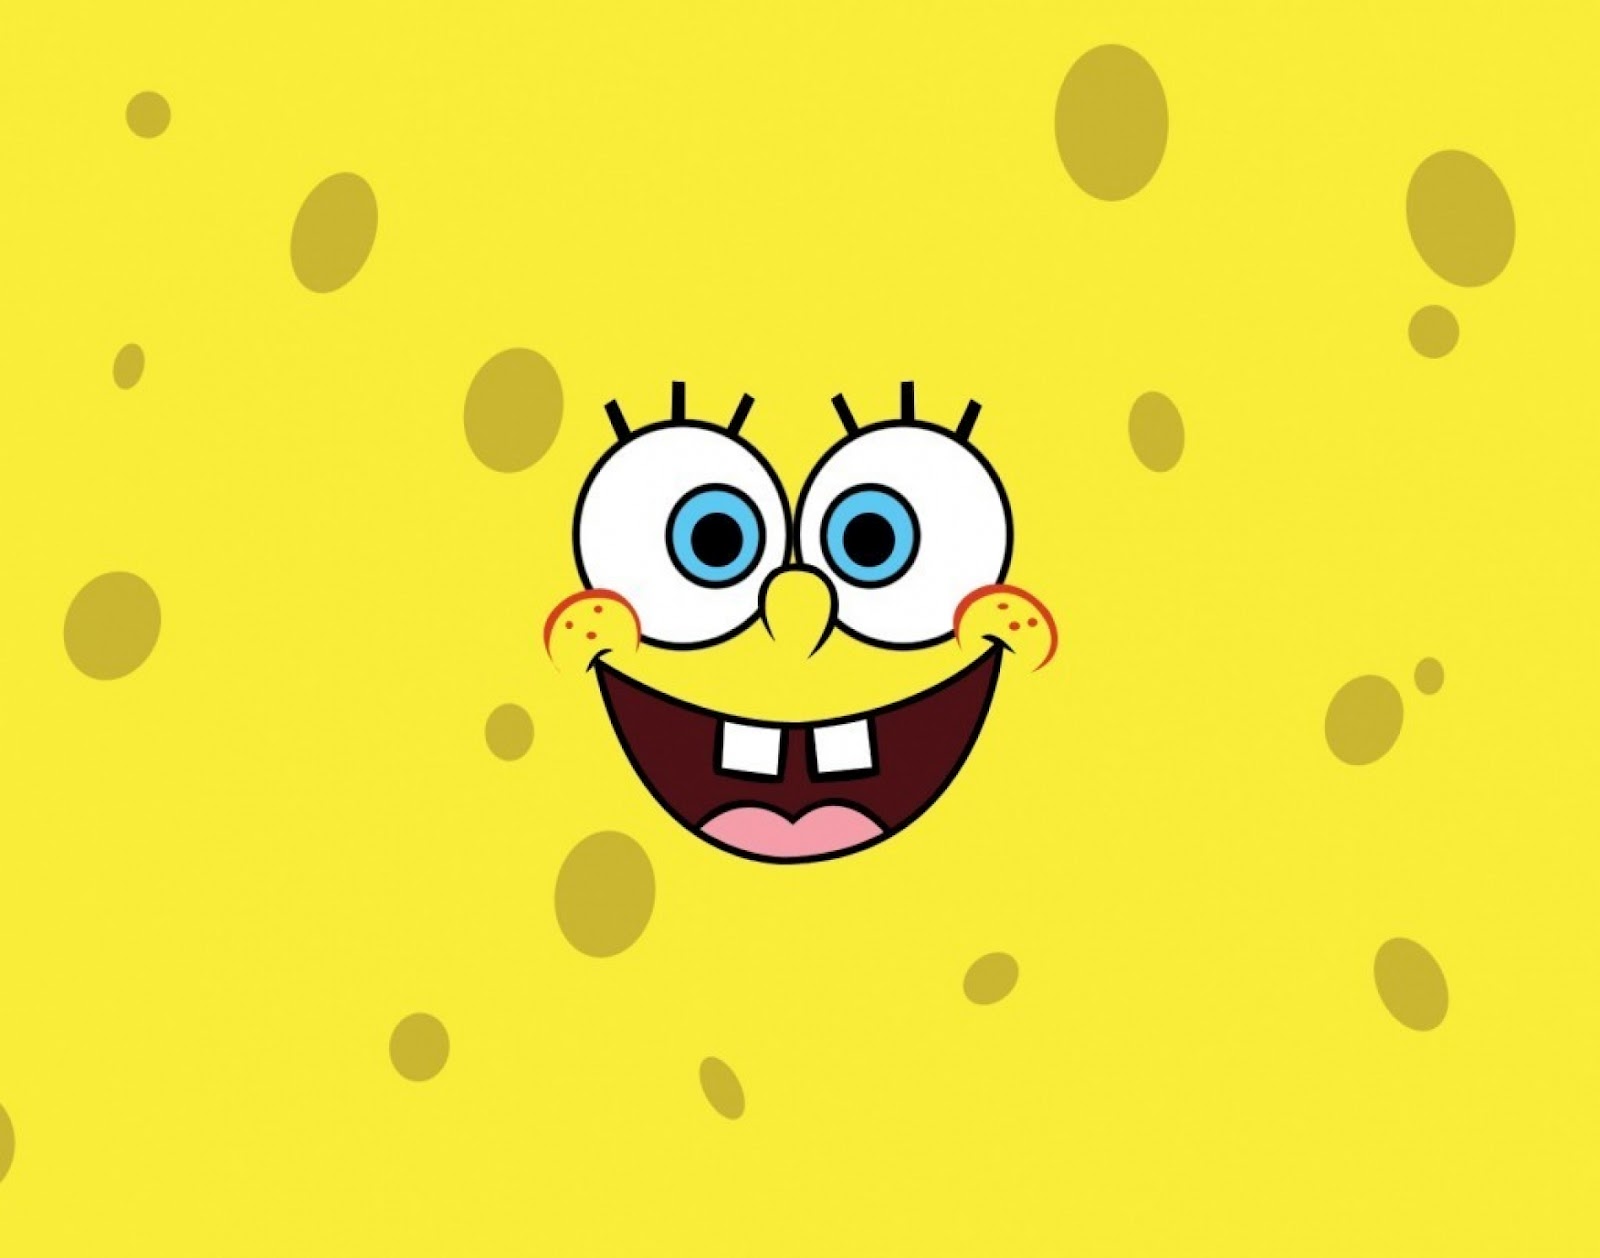 Funny Face Spongebob Squarepants Cartoon Anima #2989 Wallpaper ...